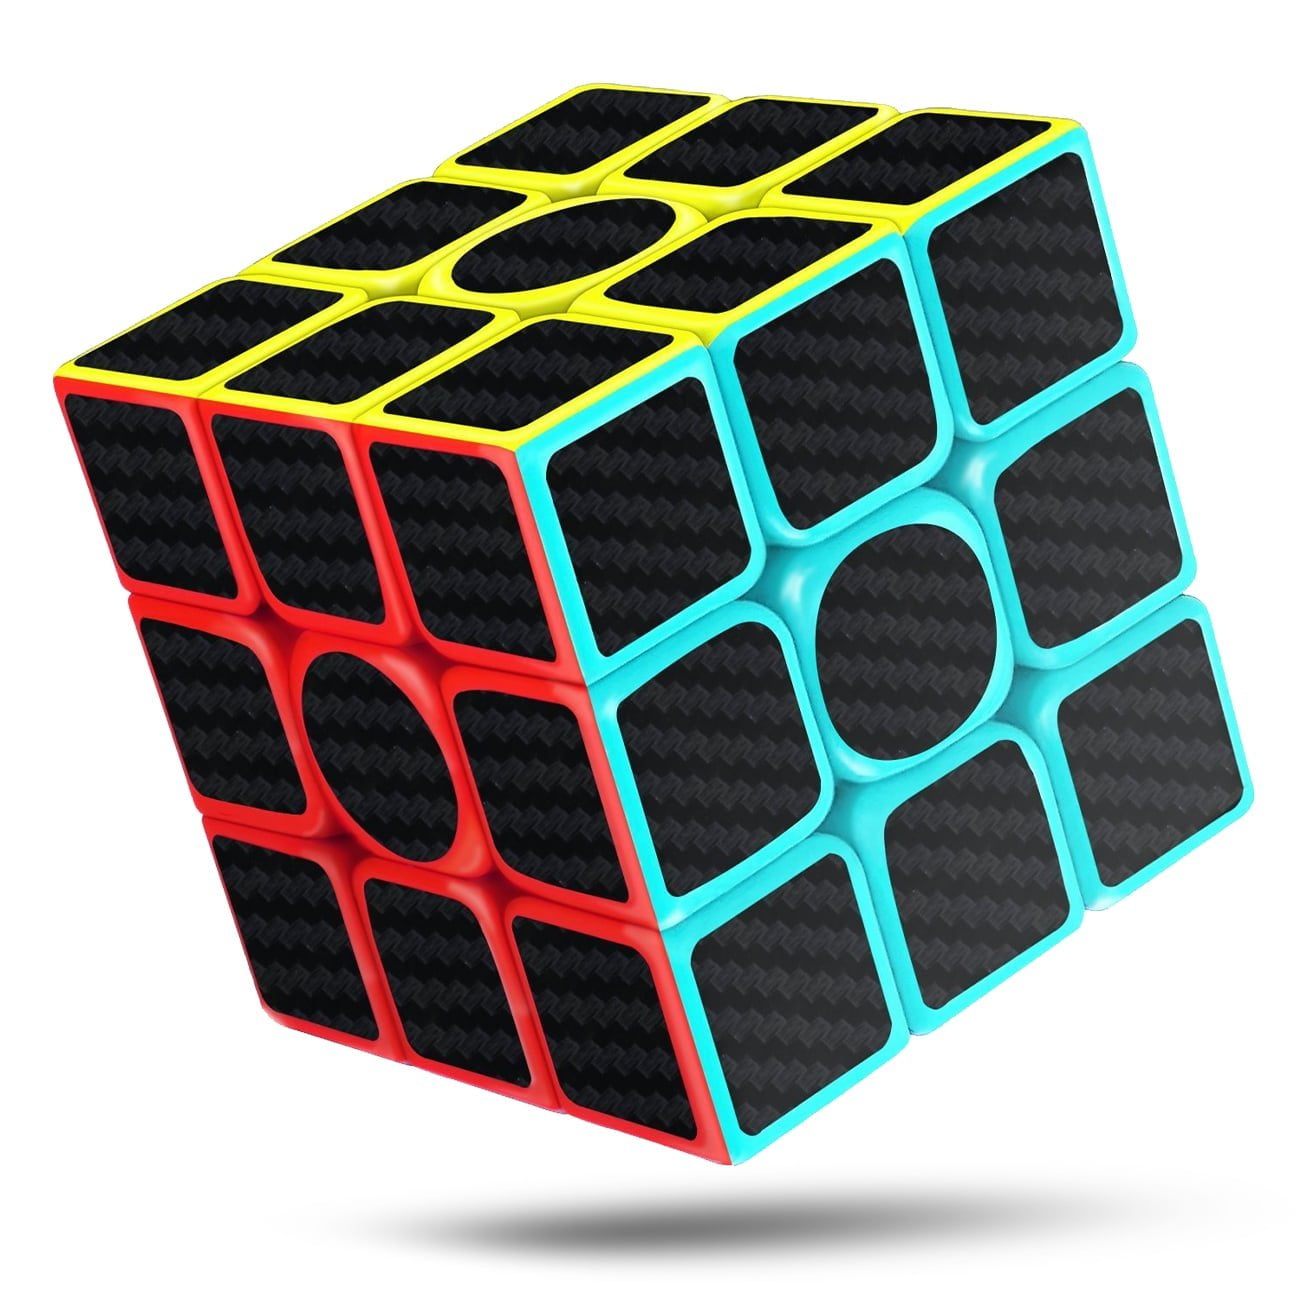 3x3x3 Twist Puzzle Magic Rubix Cube Classic Cube Toy Game Kids